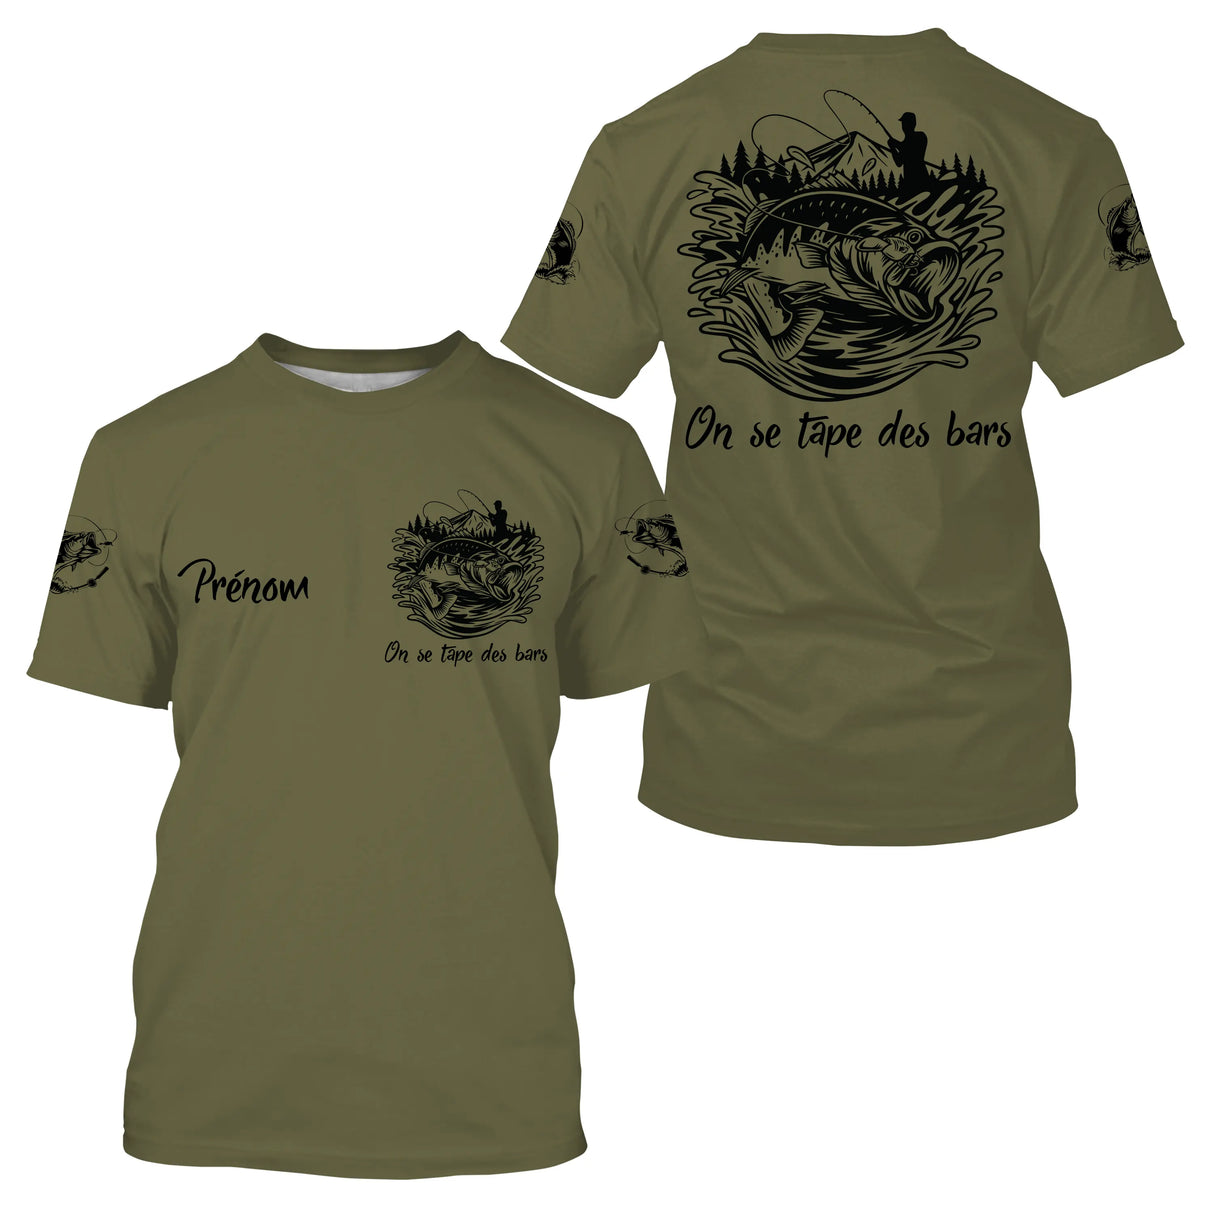 We Hit Bars T-shirt, Original Fisherman Gift, Personalized Clothing for Fishing - CT21122227